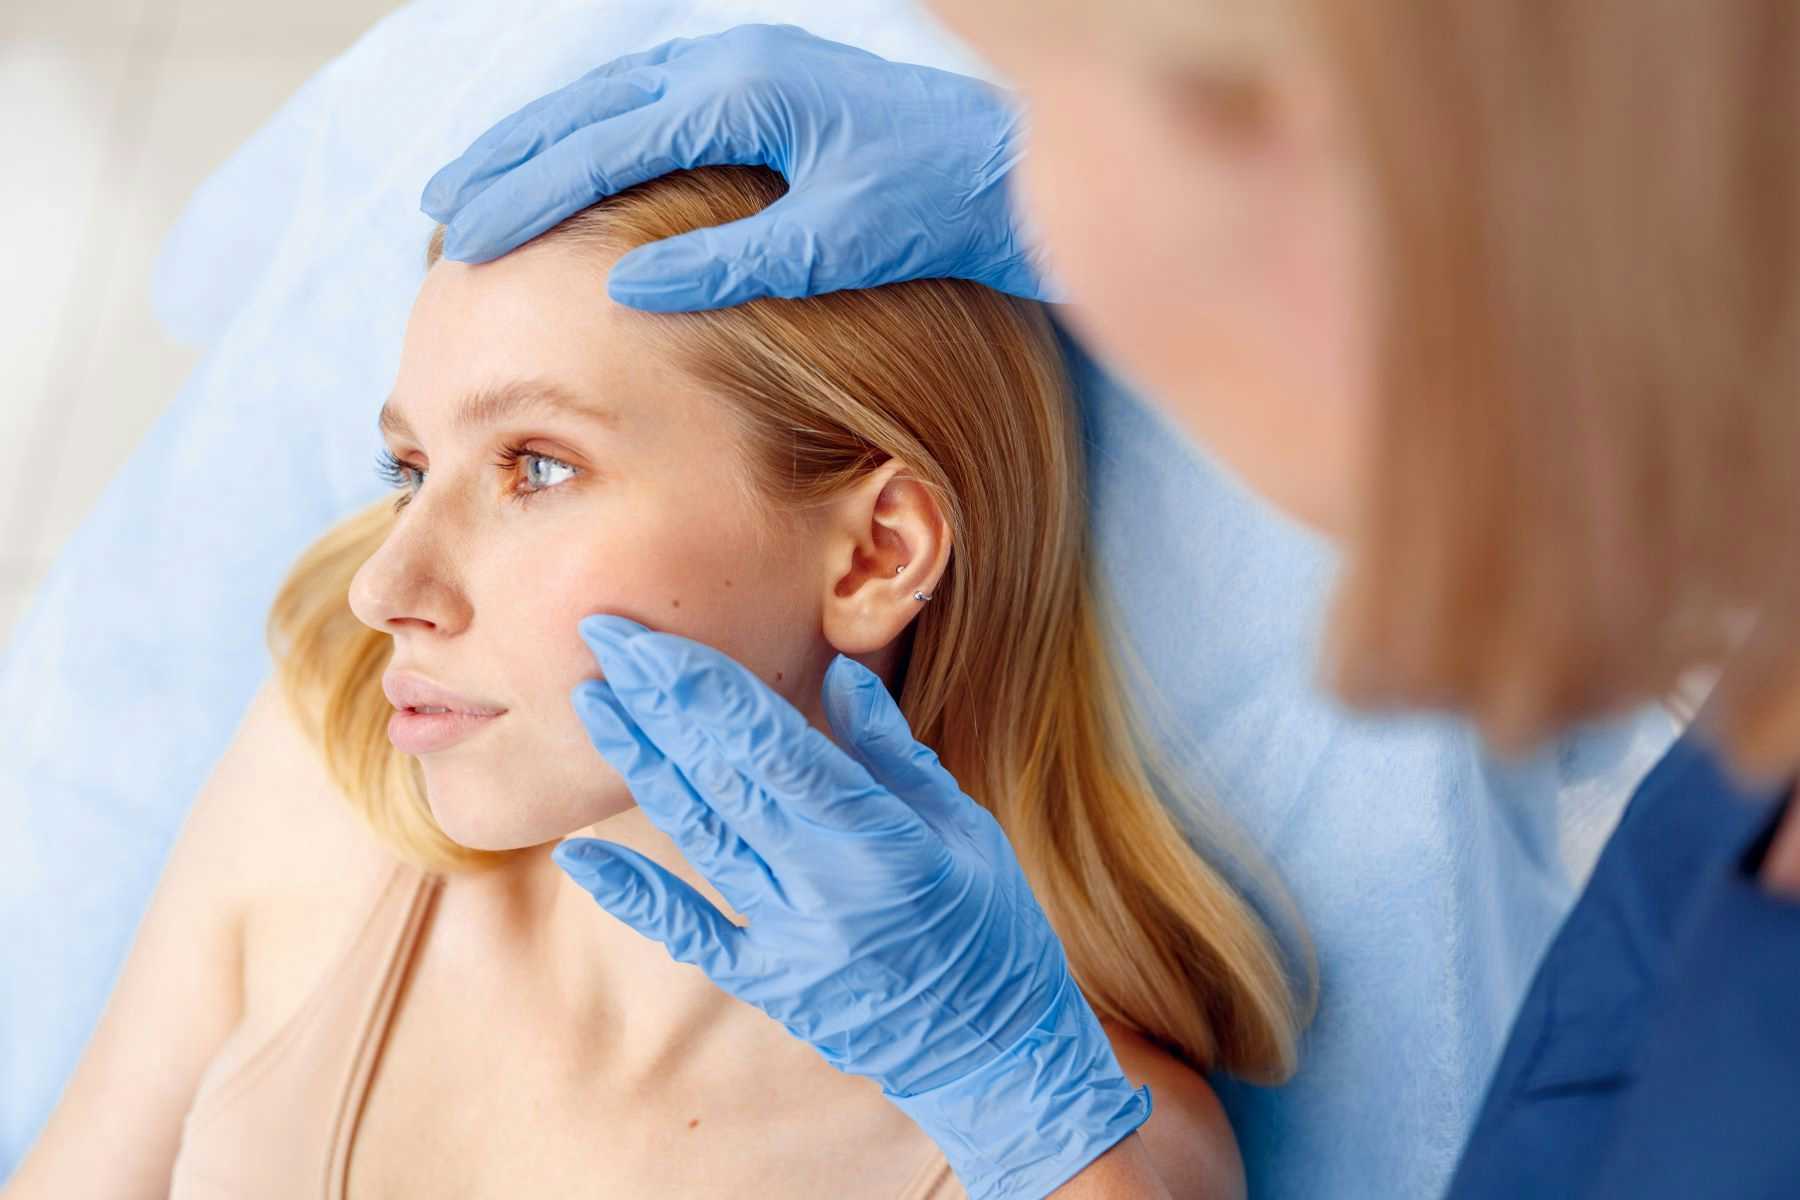 Dermatologist Inspecting Woman's Cheek